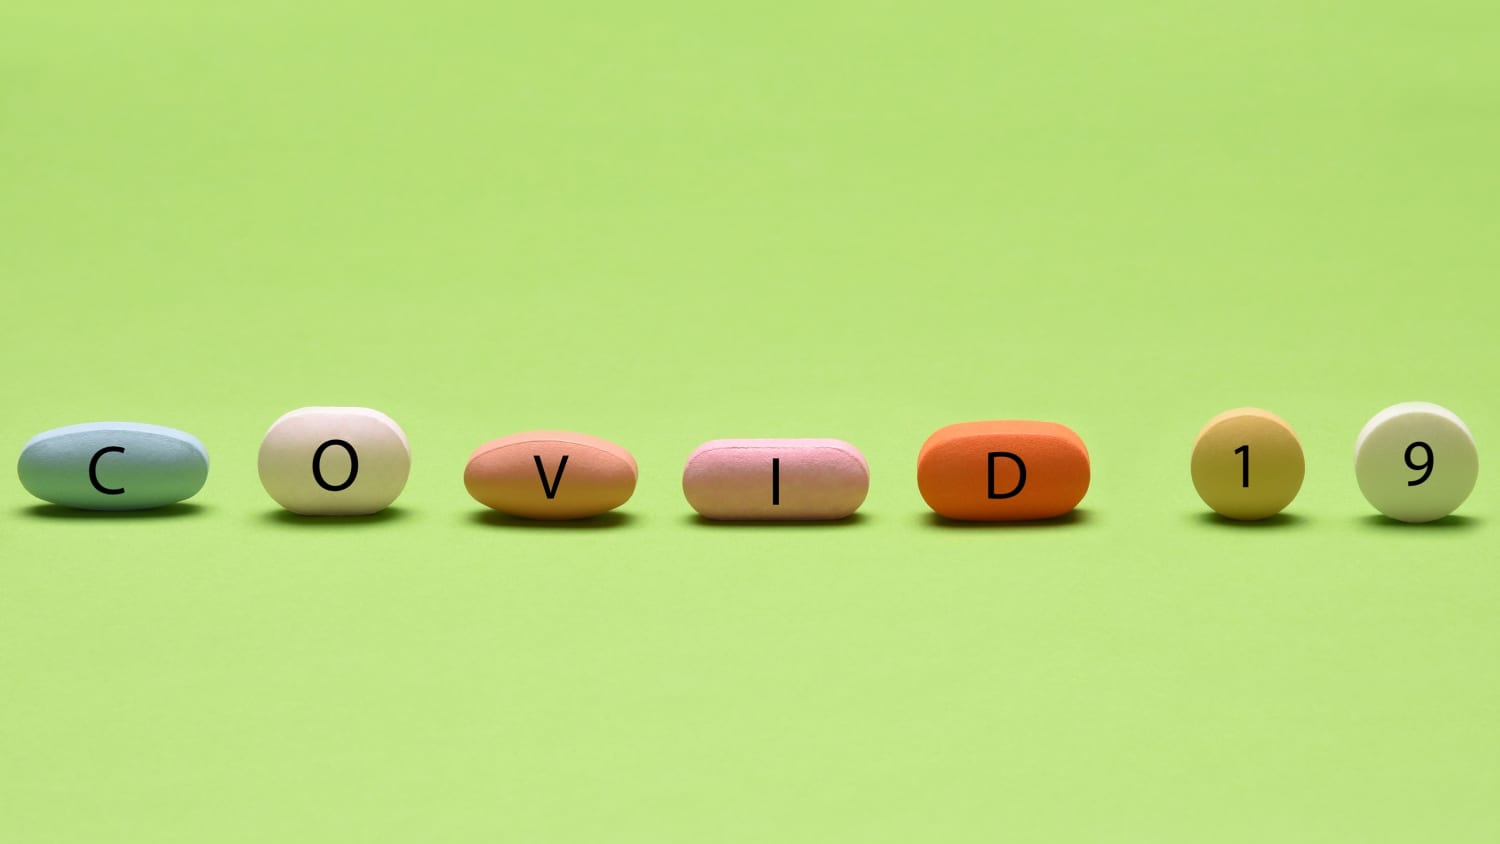 pills spelling covid, representing COVID-19 treatments